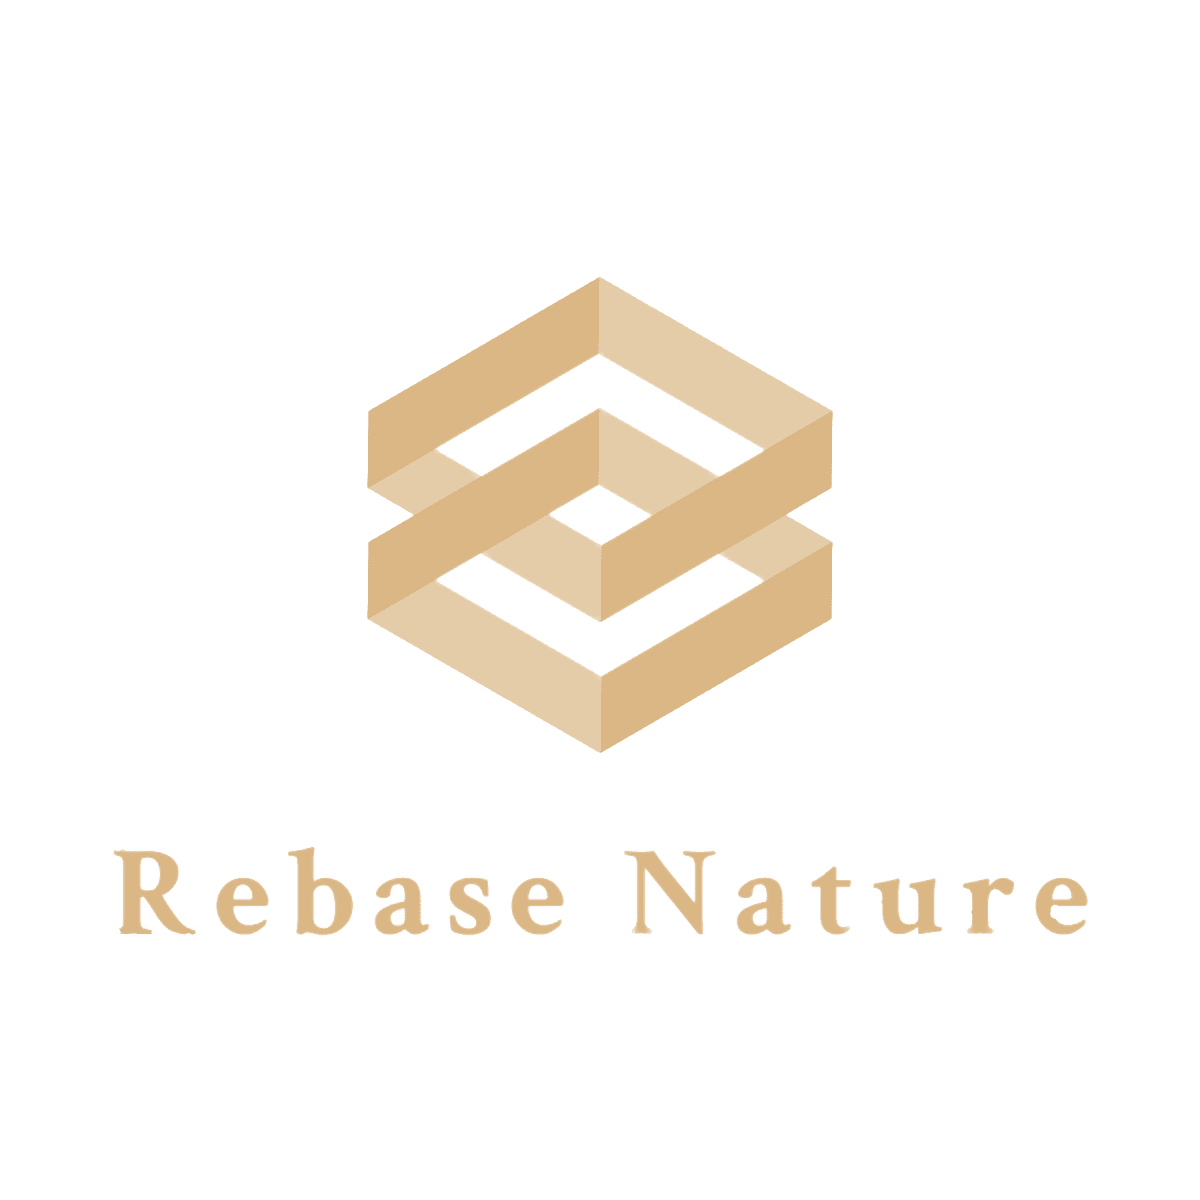 Rebase Natureのロゴです。